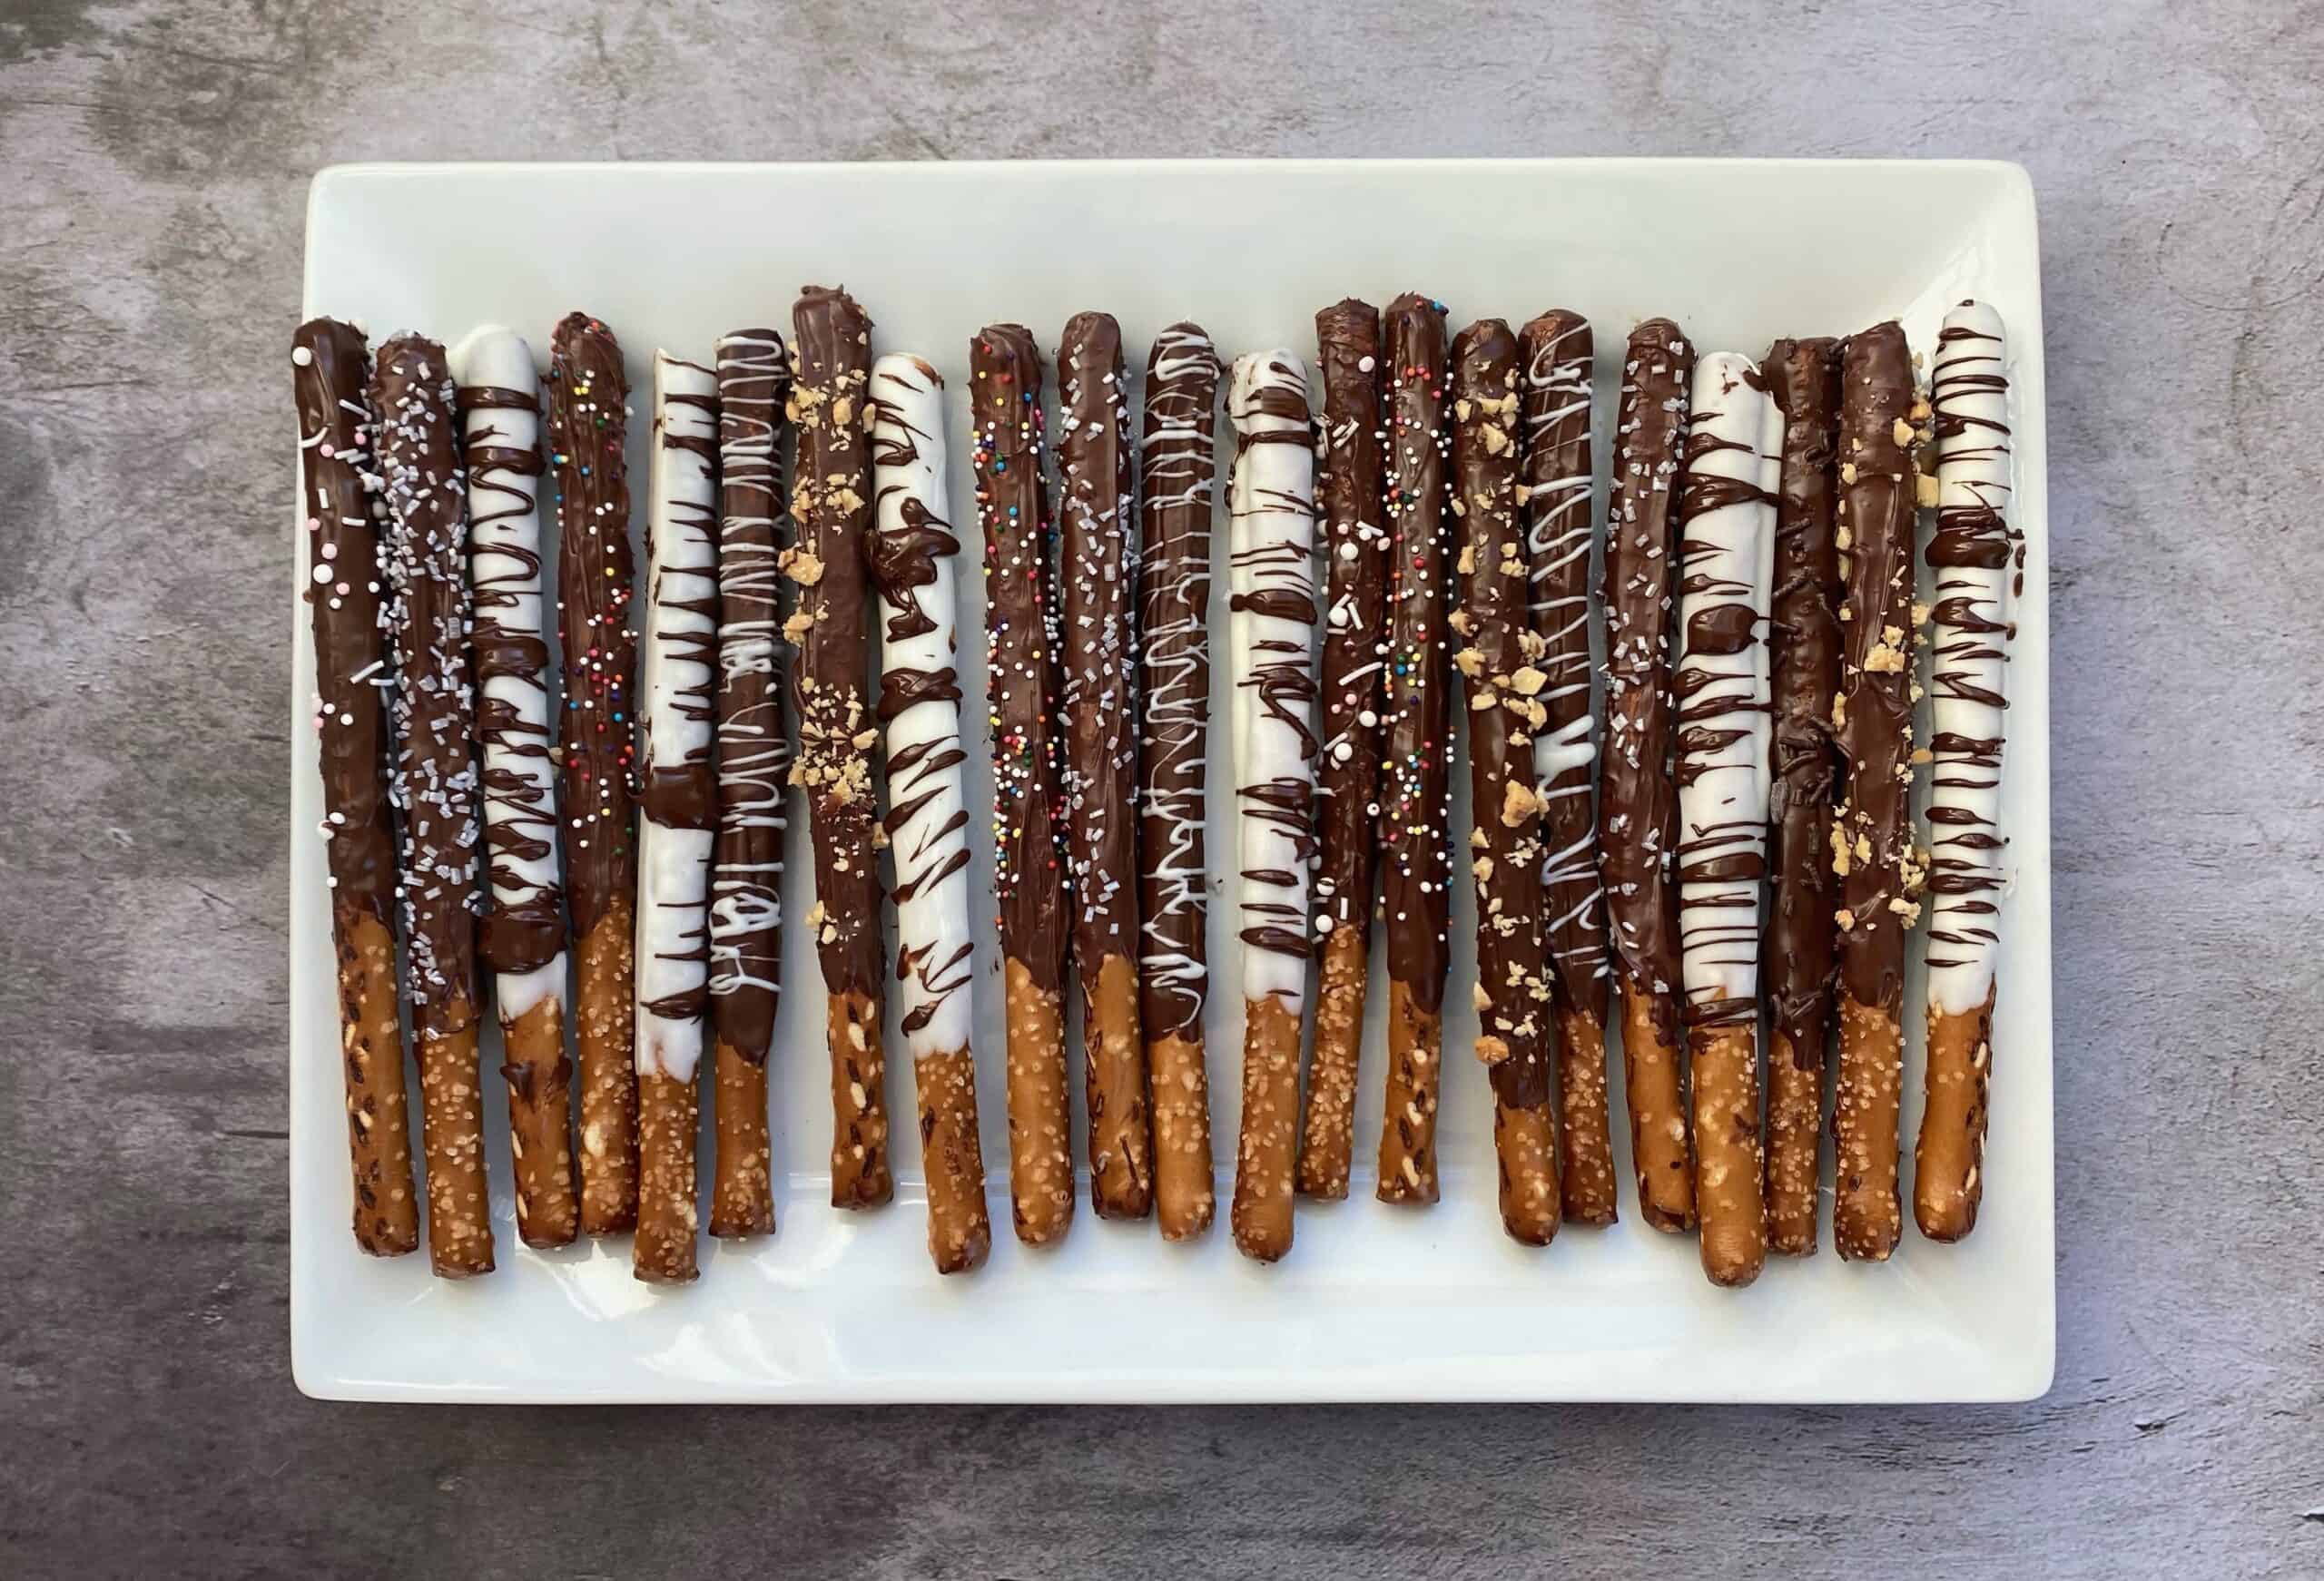 Chocolate covered pretzel rods